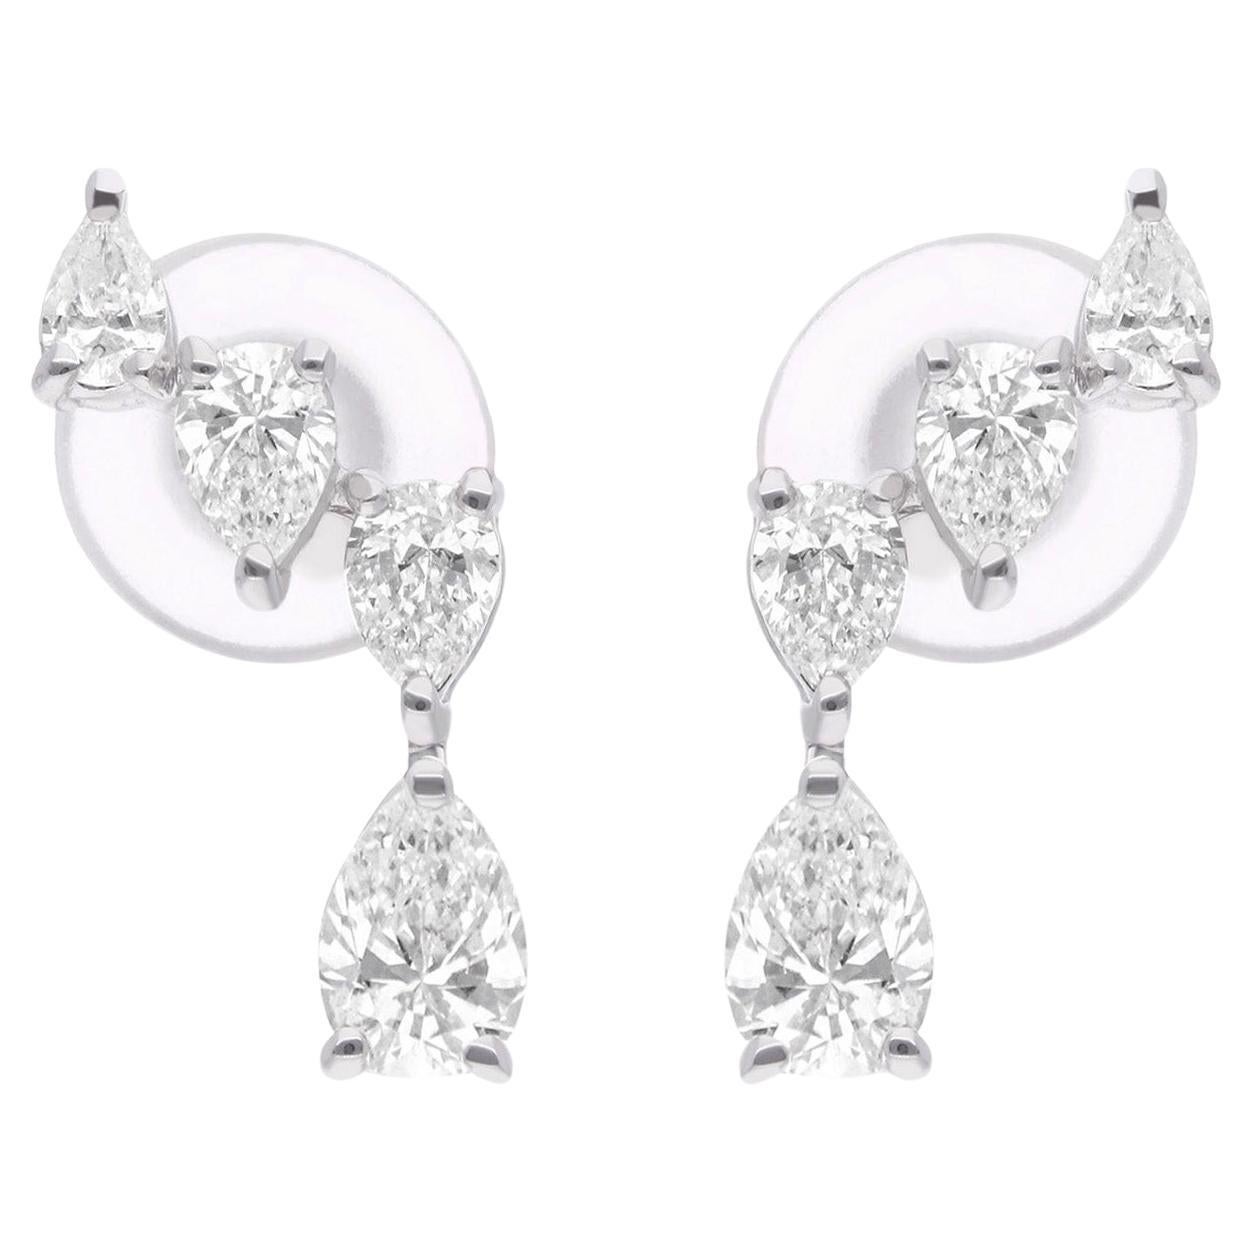 SI Clarity HI Color Pear Shape Diamond Earrings 14 Karat White Gold Fine Jewelry